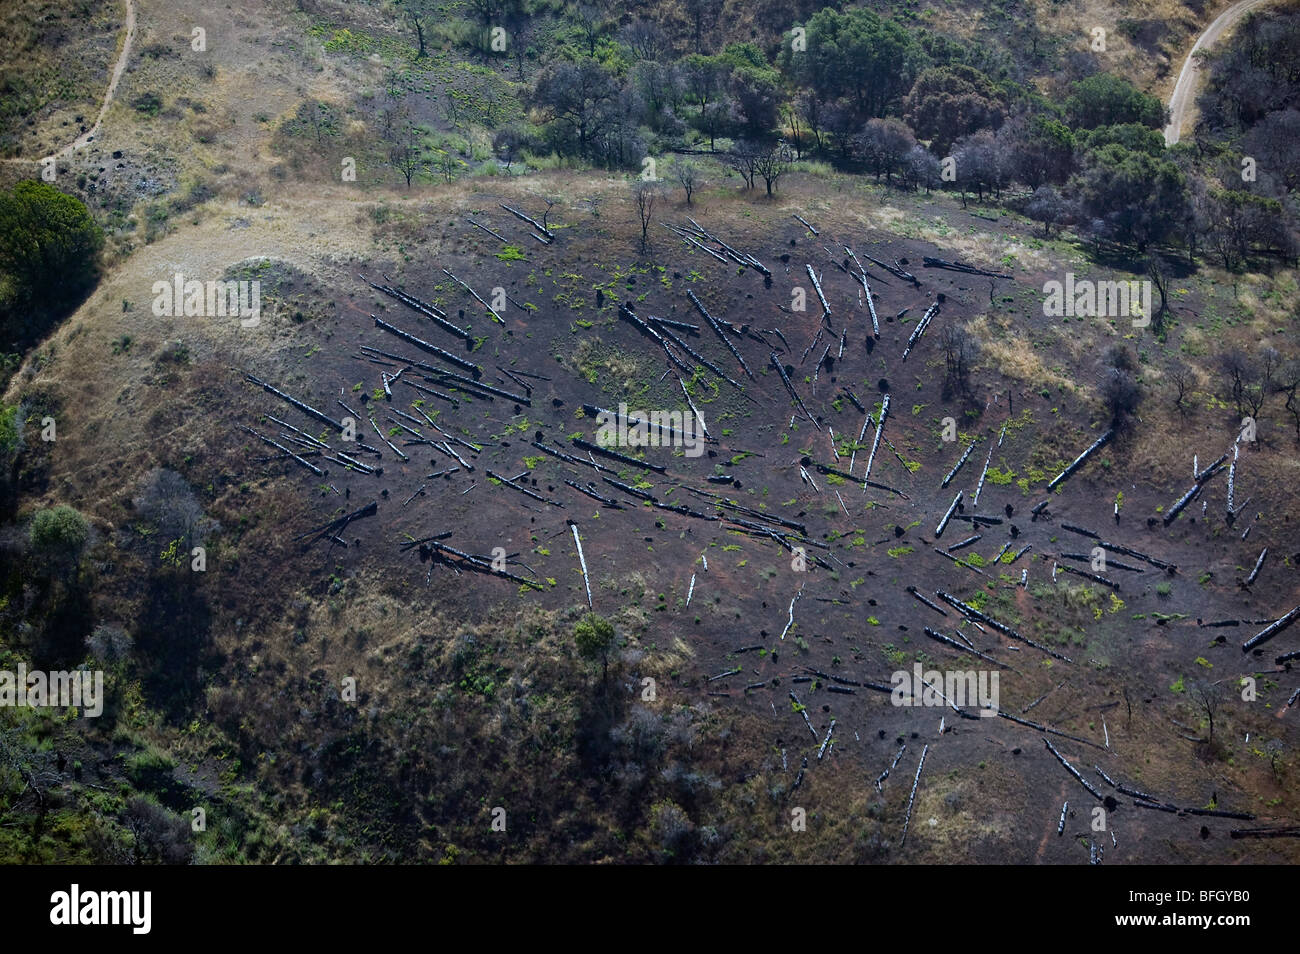 aerial view clear cutting invasive species Eucalyptus Angel Island 'San Francisco bay' Stock Photo